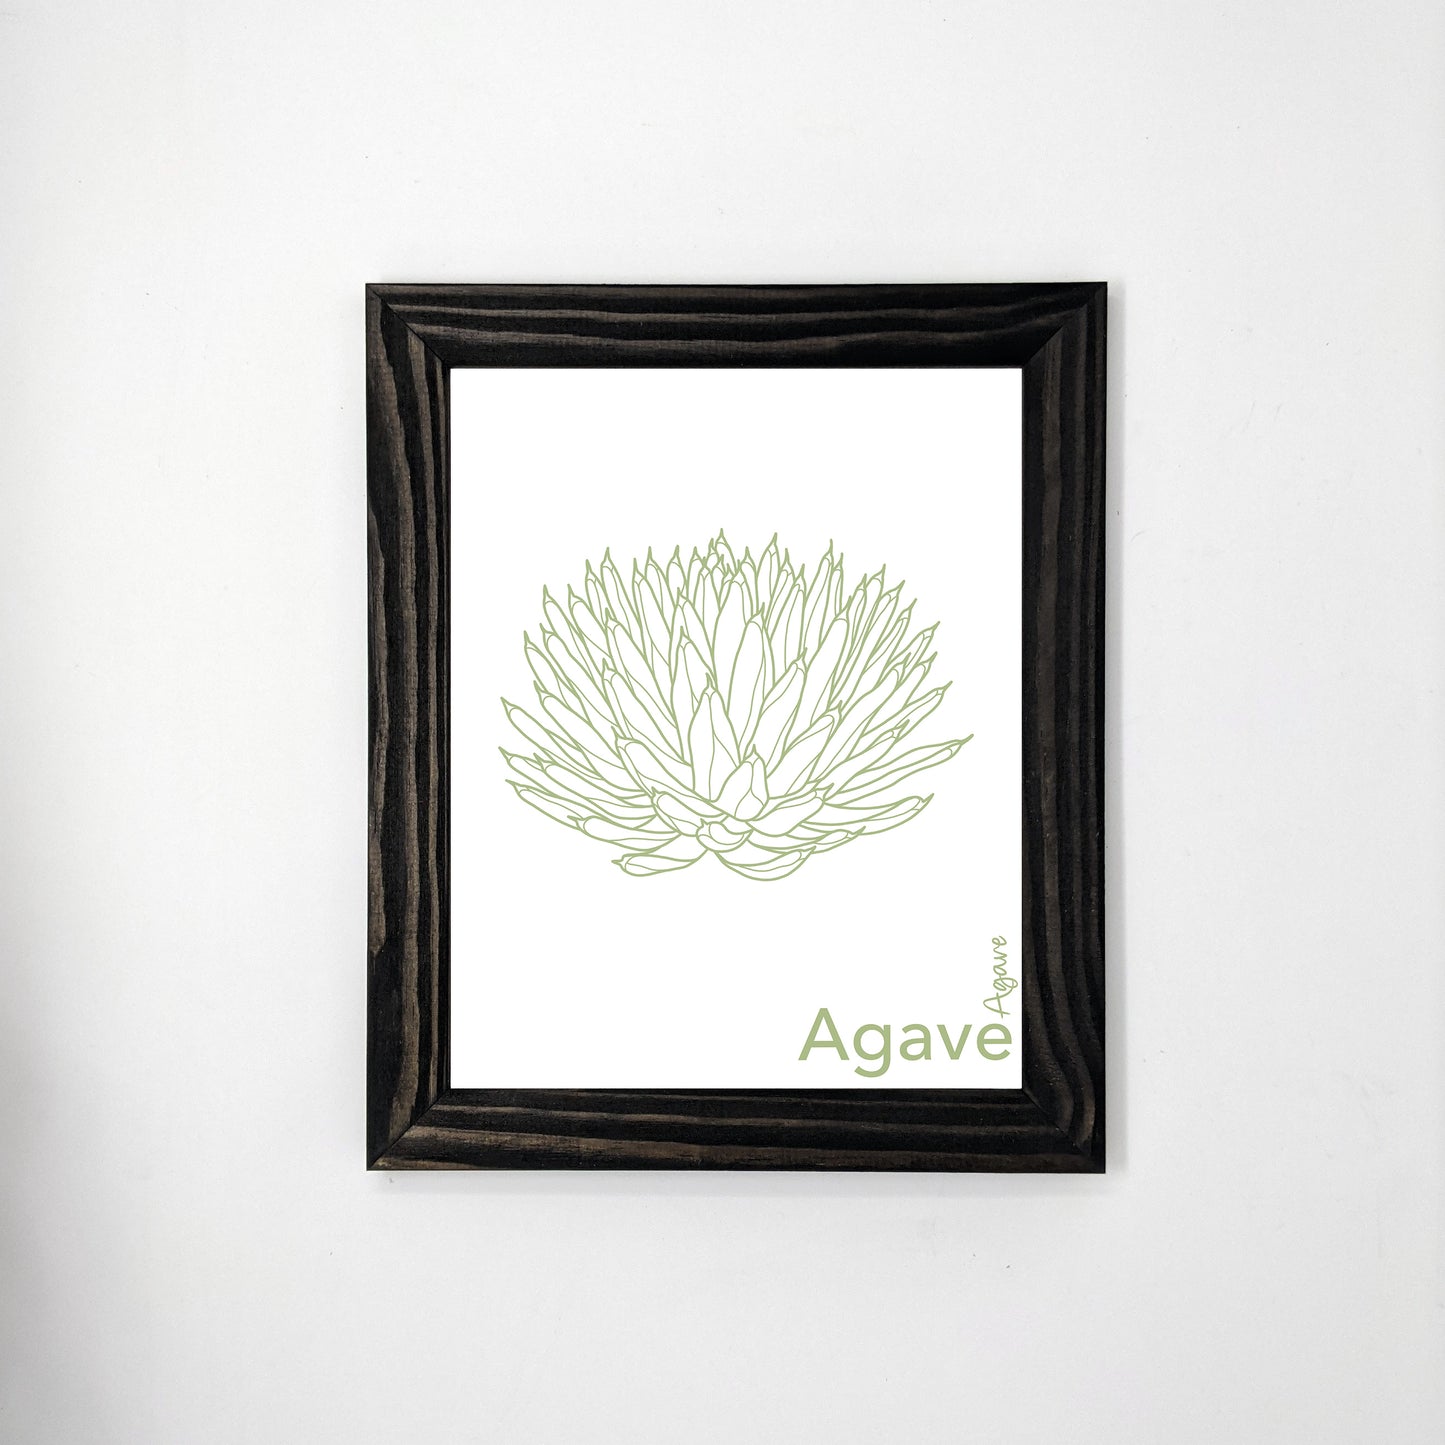 Bilingual Portuguese / English Agave Plant Print (1) on Linen